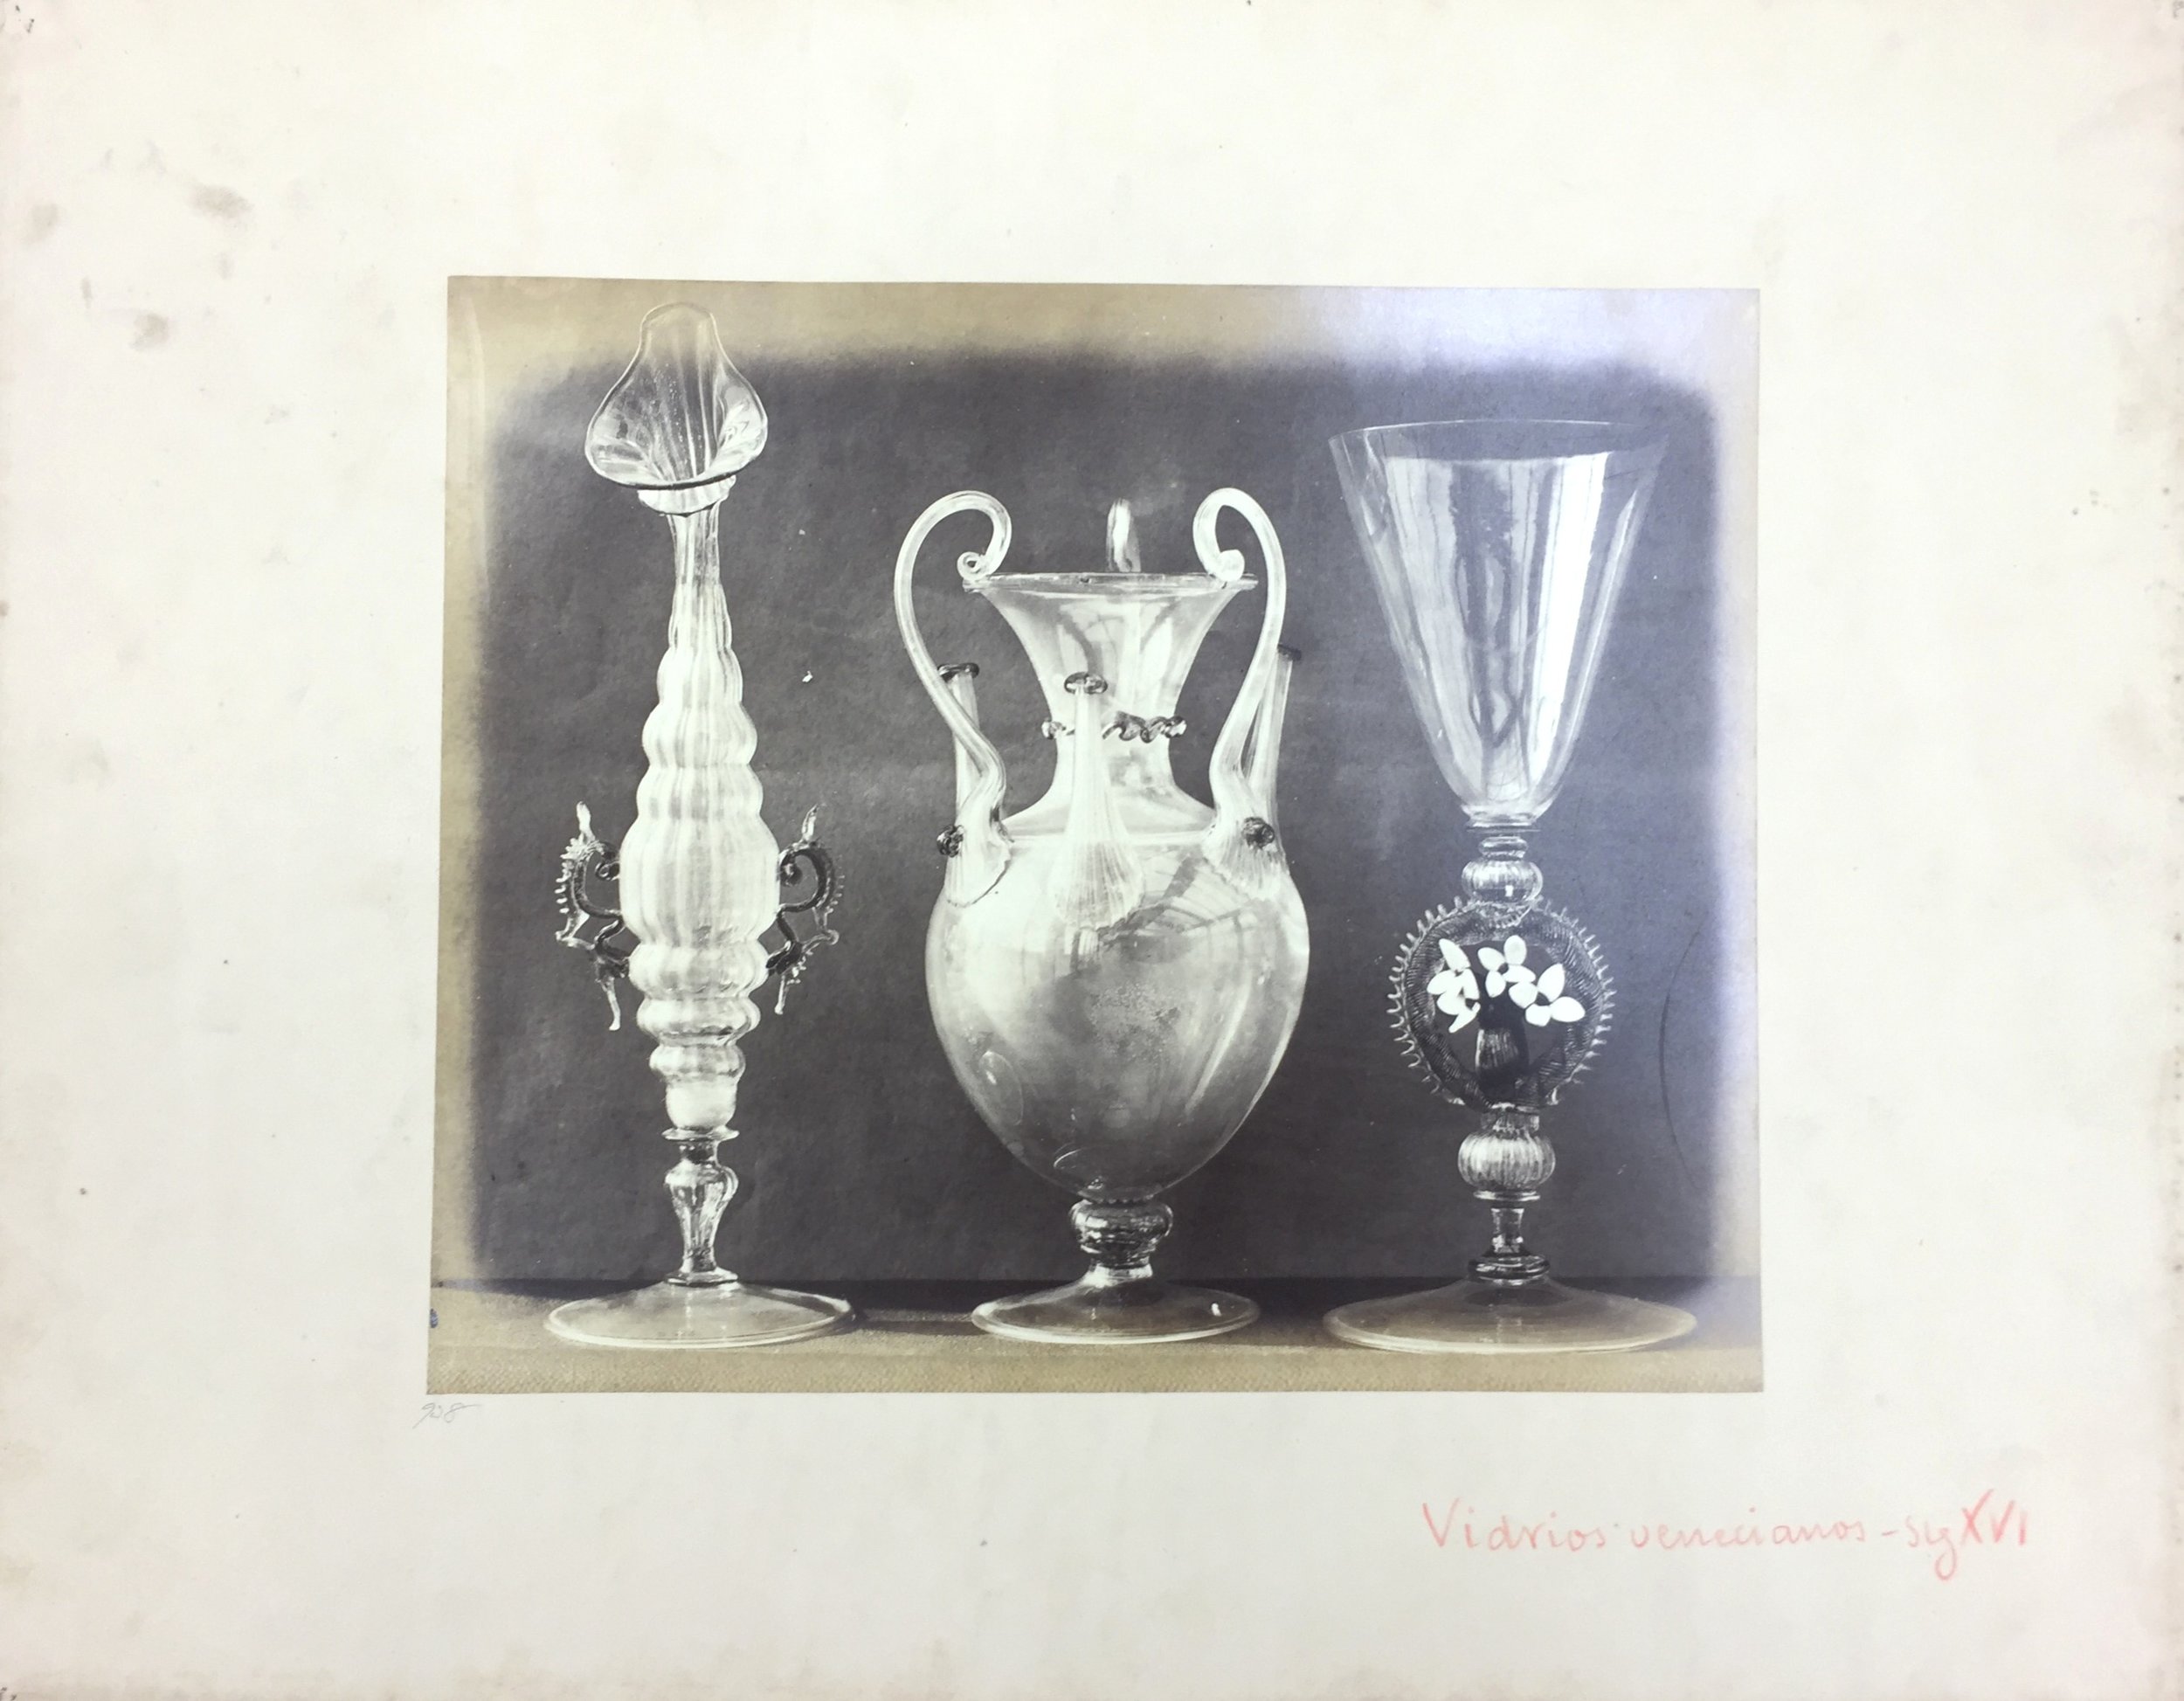   Medieval Venetian Glass, A.D. 1520, No. 938, Antiquities of Britain, British Museum , 1872, Photographed by Stephen Thompson, Vintage albumen print, Photograph: 23 x 27.5 cm, Mount board: 35.5 x 45.5 cm 